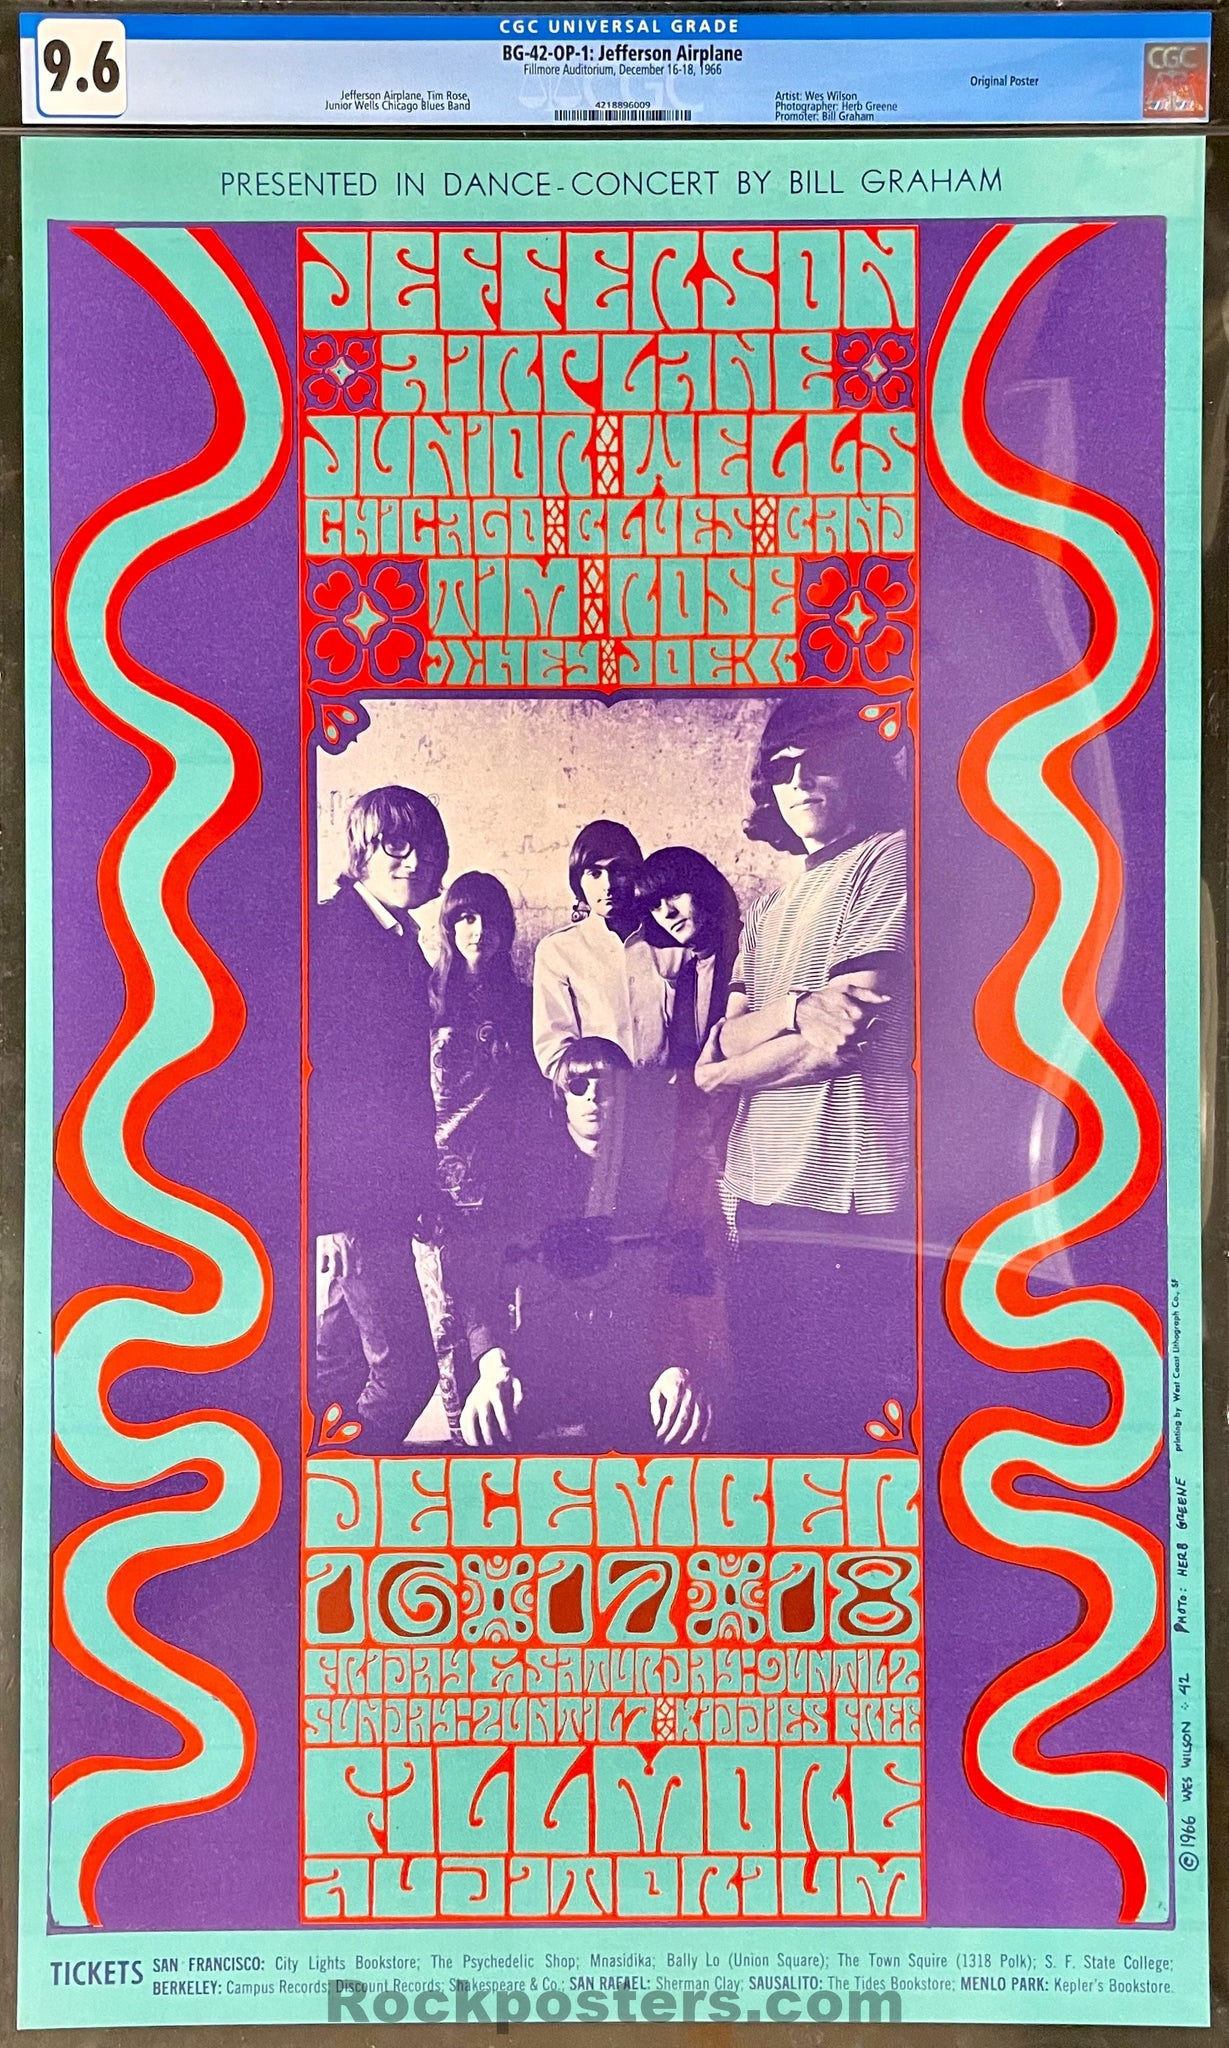 AUCTION - BG-42 - Jefferson Airplane - Wes Wilson - Fillmore Auditorium - 1966 Poster - CGC Graded 9.6